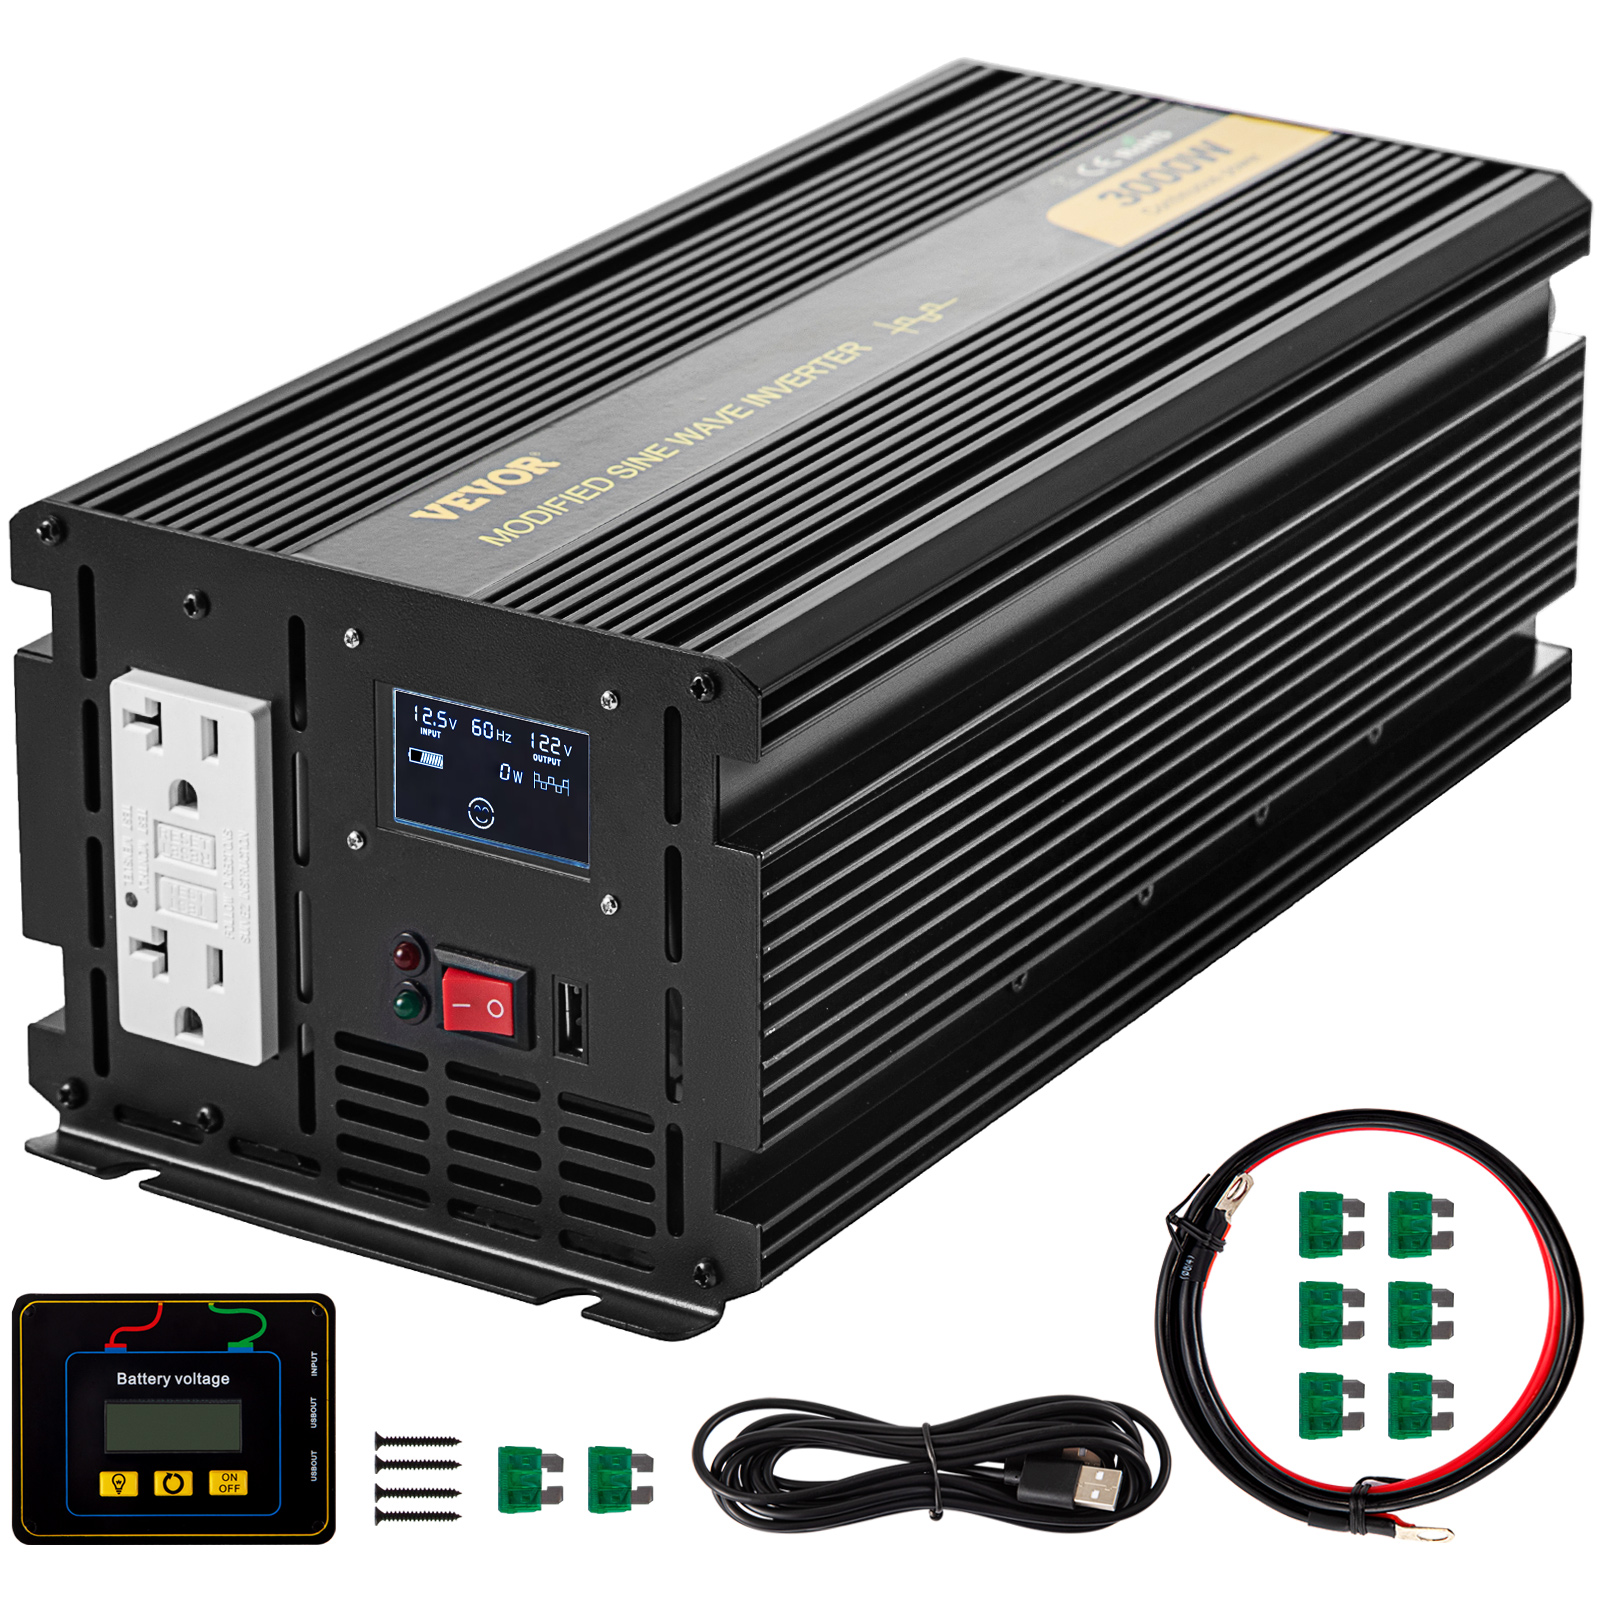 5000W Power Inverter,Modified Sine Wave,DC12V to AC110V